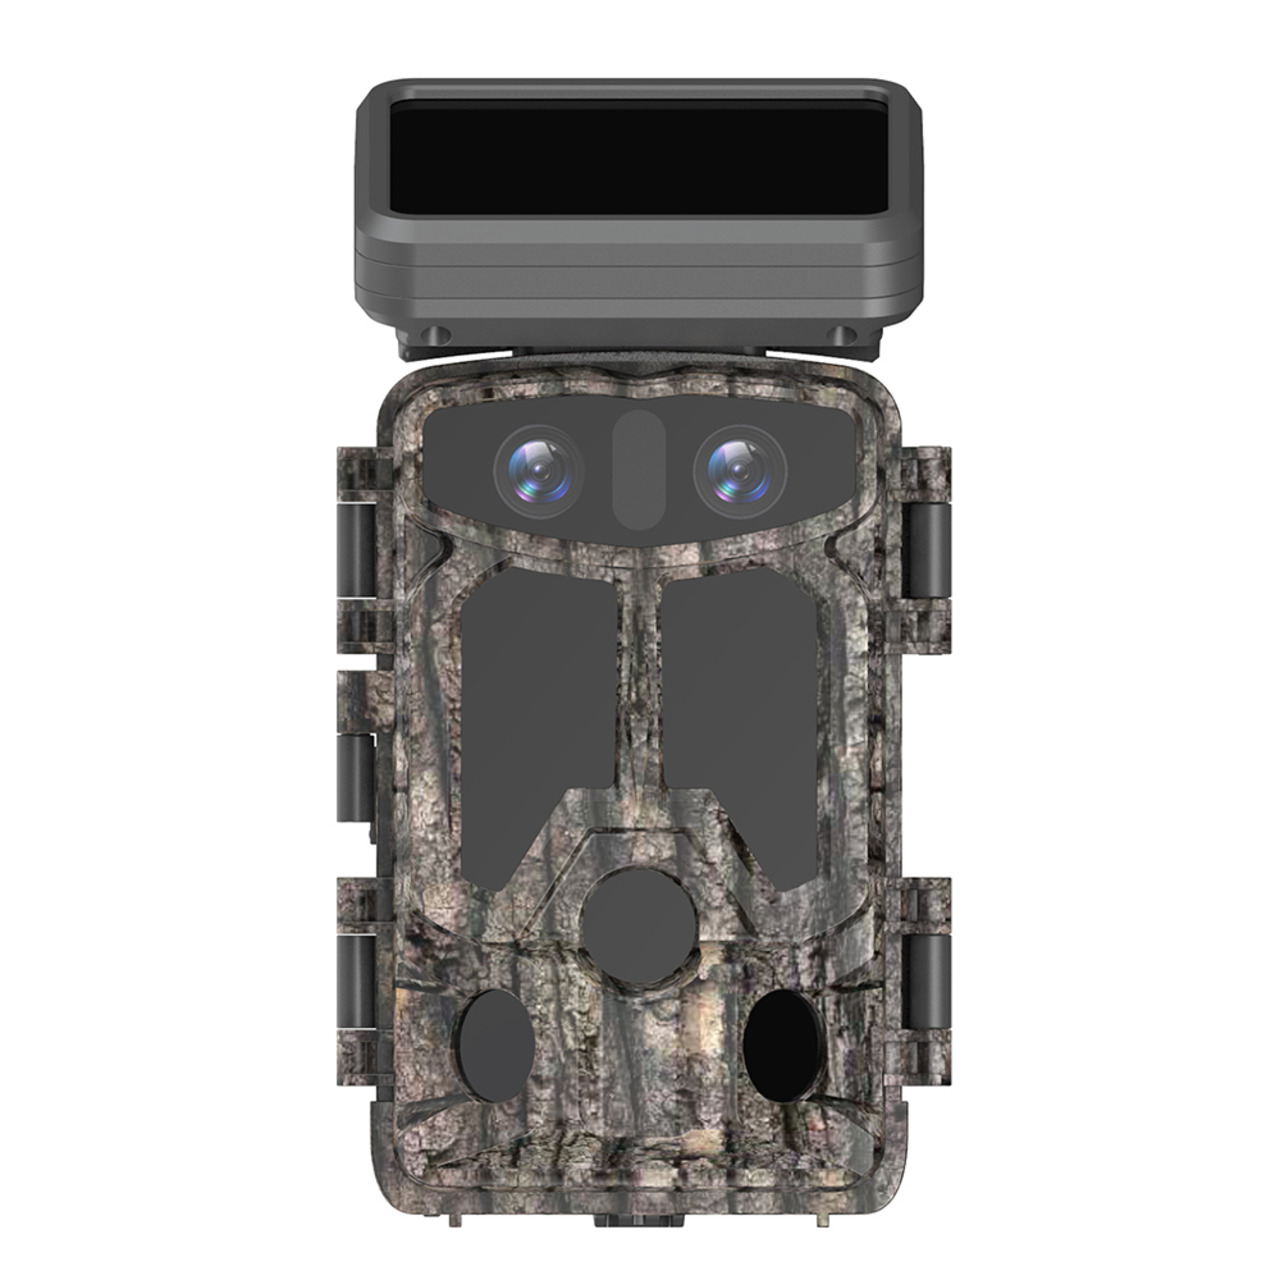 Braun Solar Fotofalle - Wildkamera Scouting Cam BLACK1320WiFi 4K- App- Dual-Kamera- WiFi- IP65 unter Sicherheitstechnik